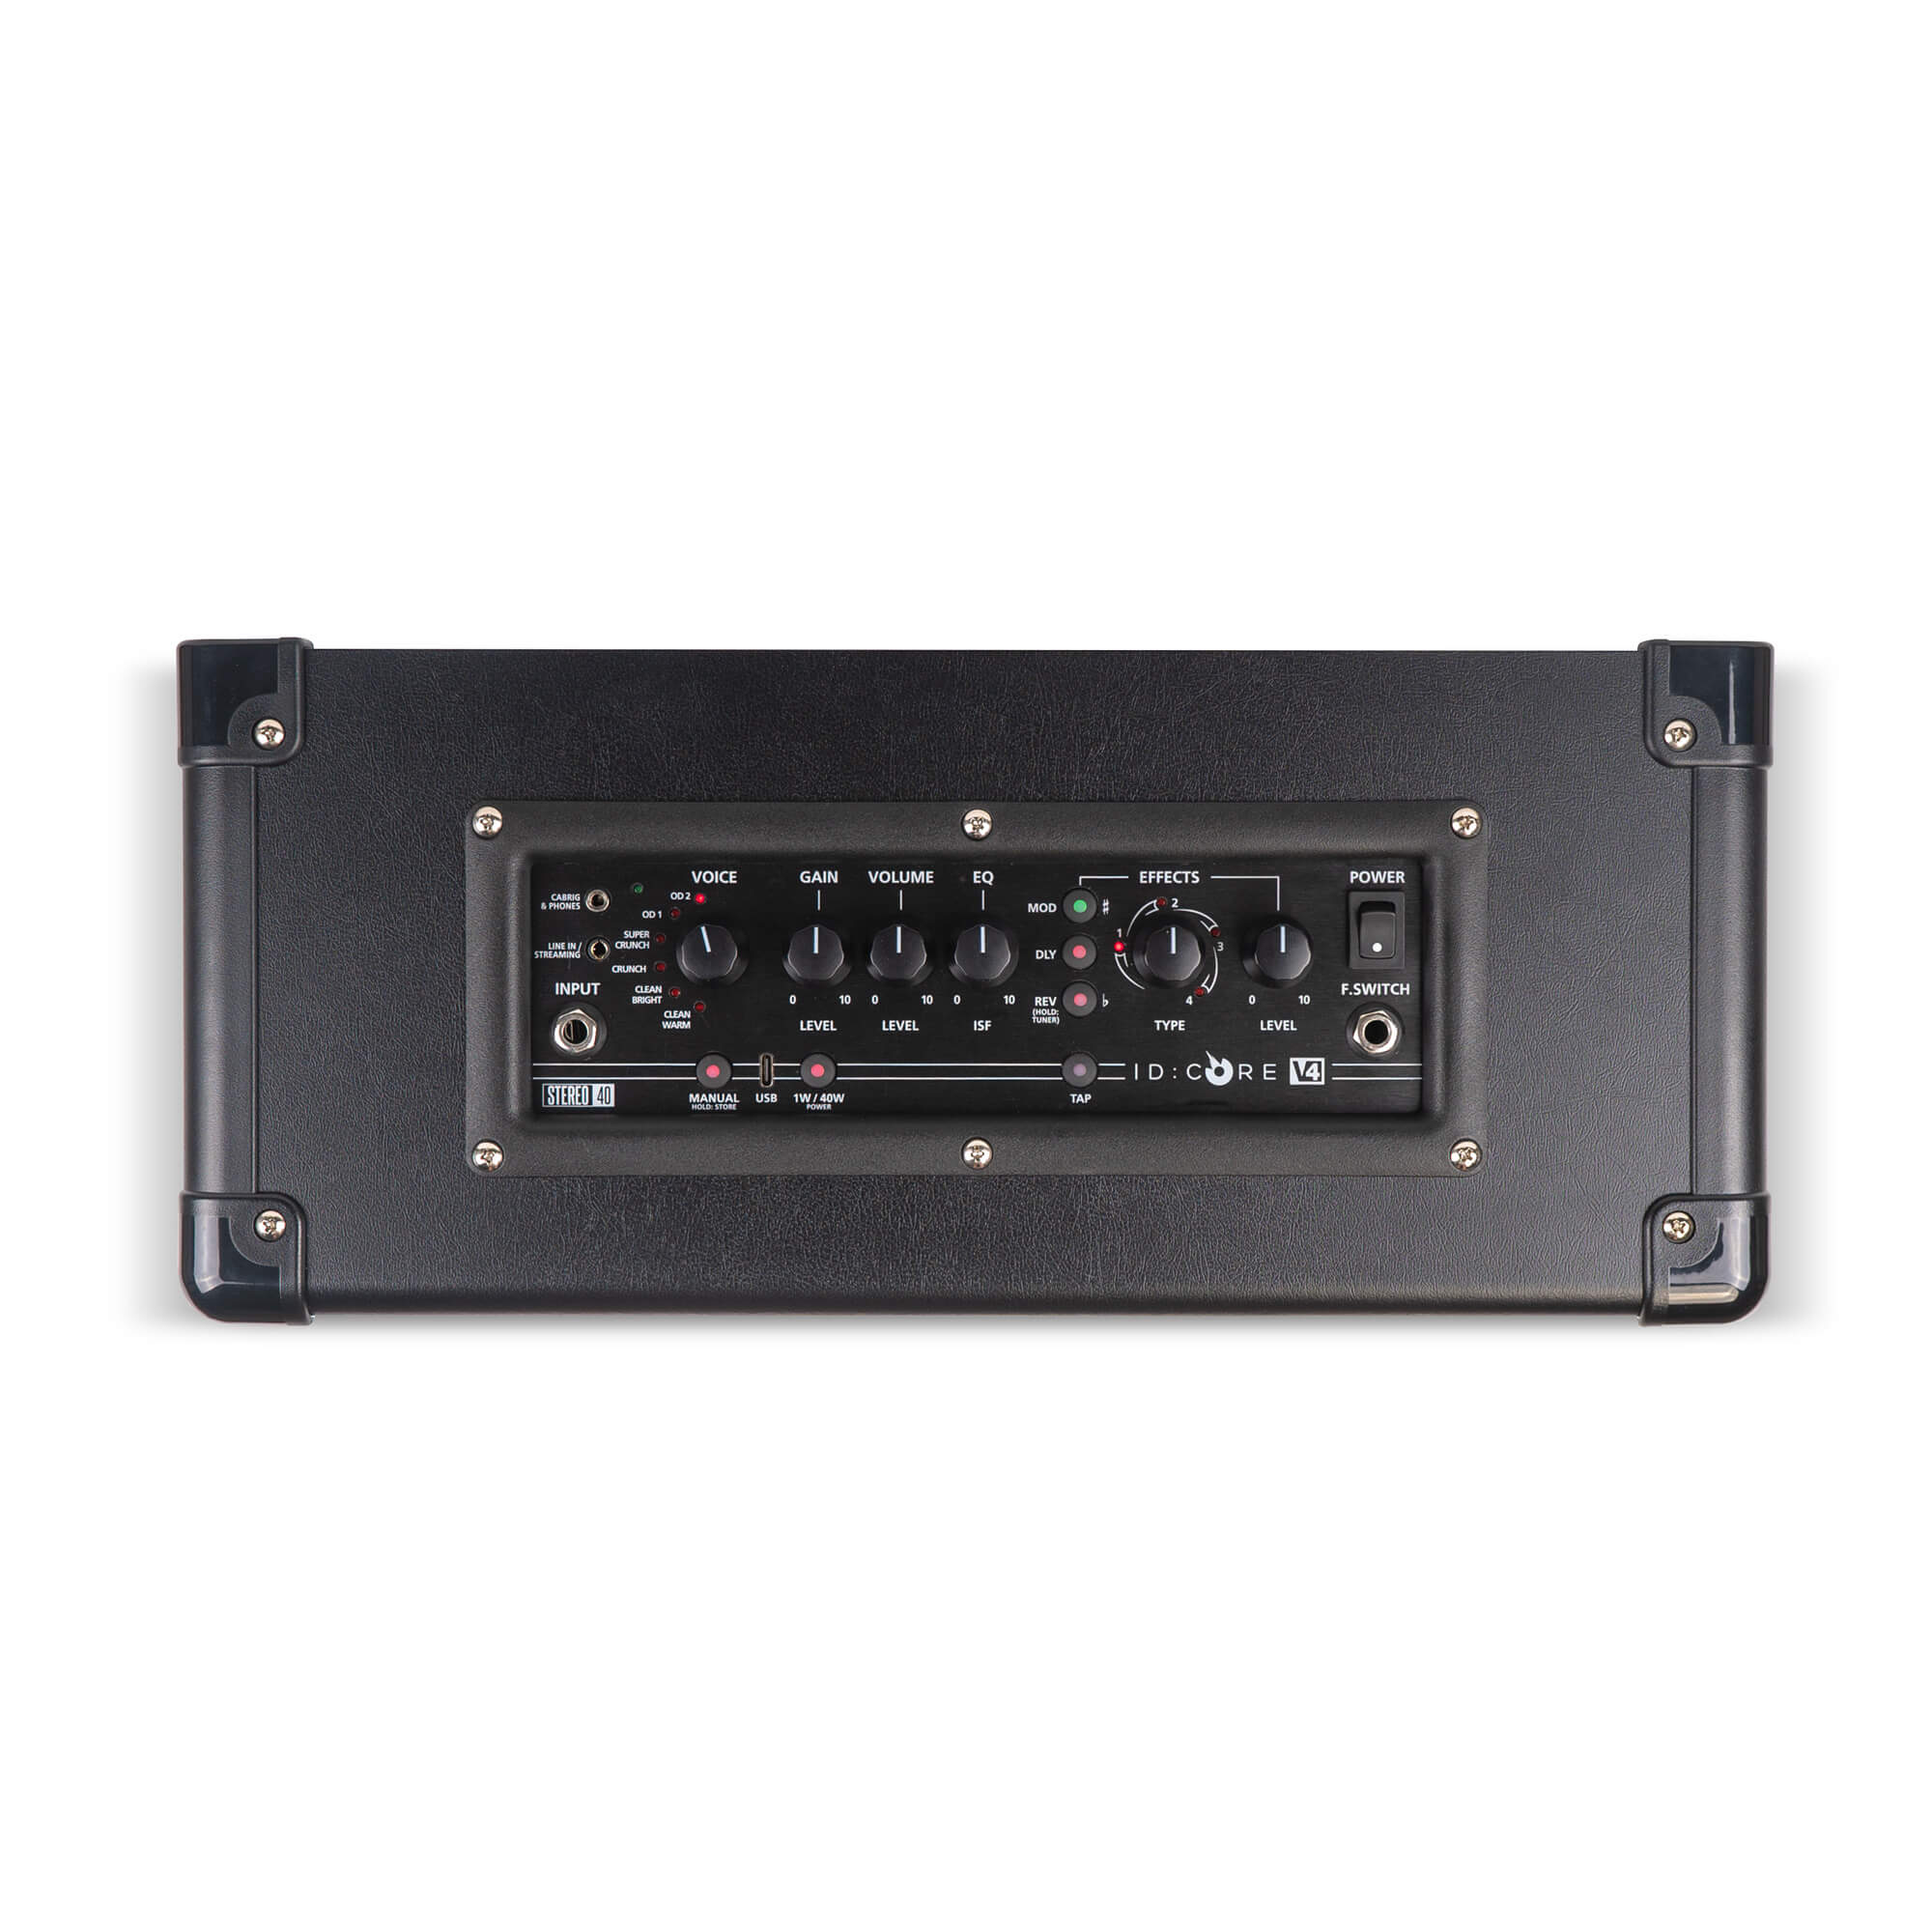 Blackstar ID:CORE 40 V4 Amplifier